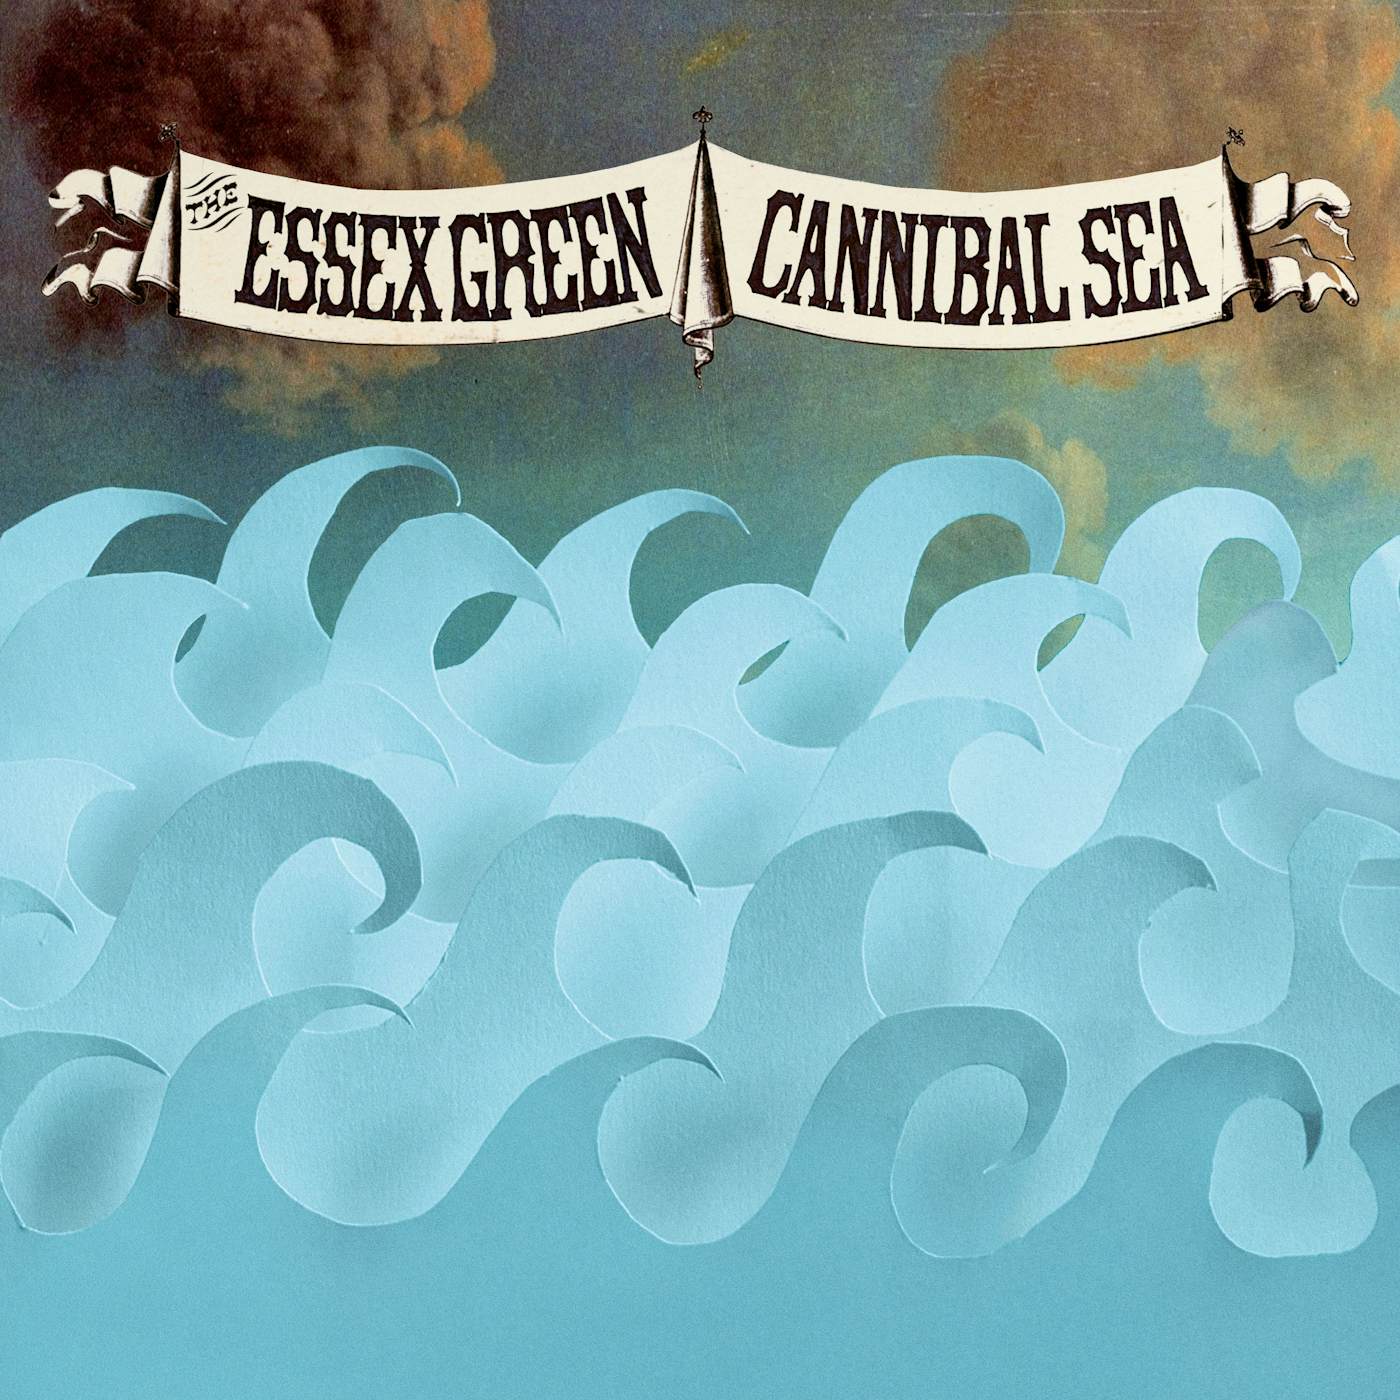 The Essex Green Cannibal Sea Vinyl Record